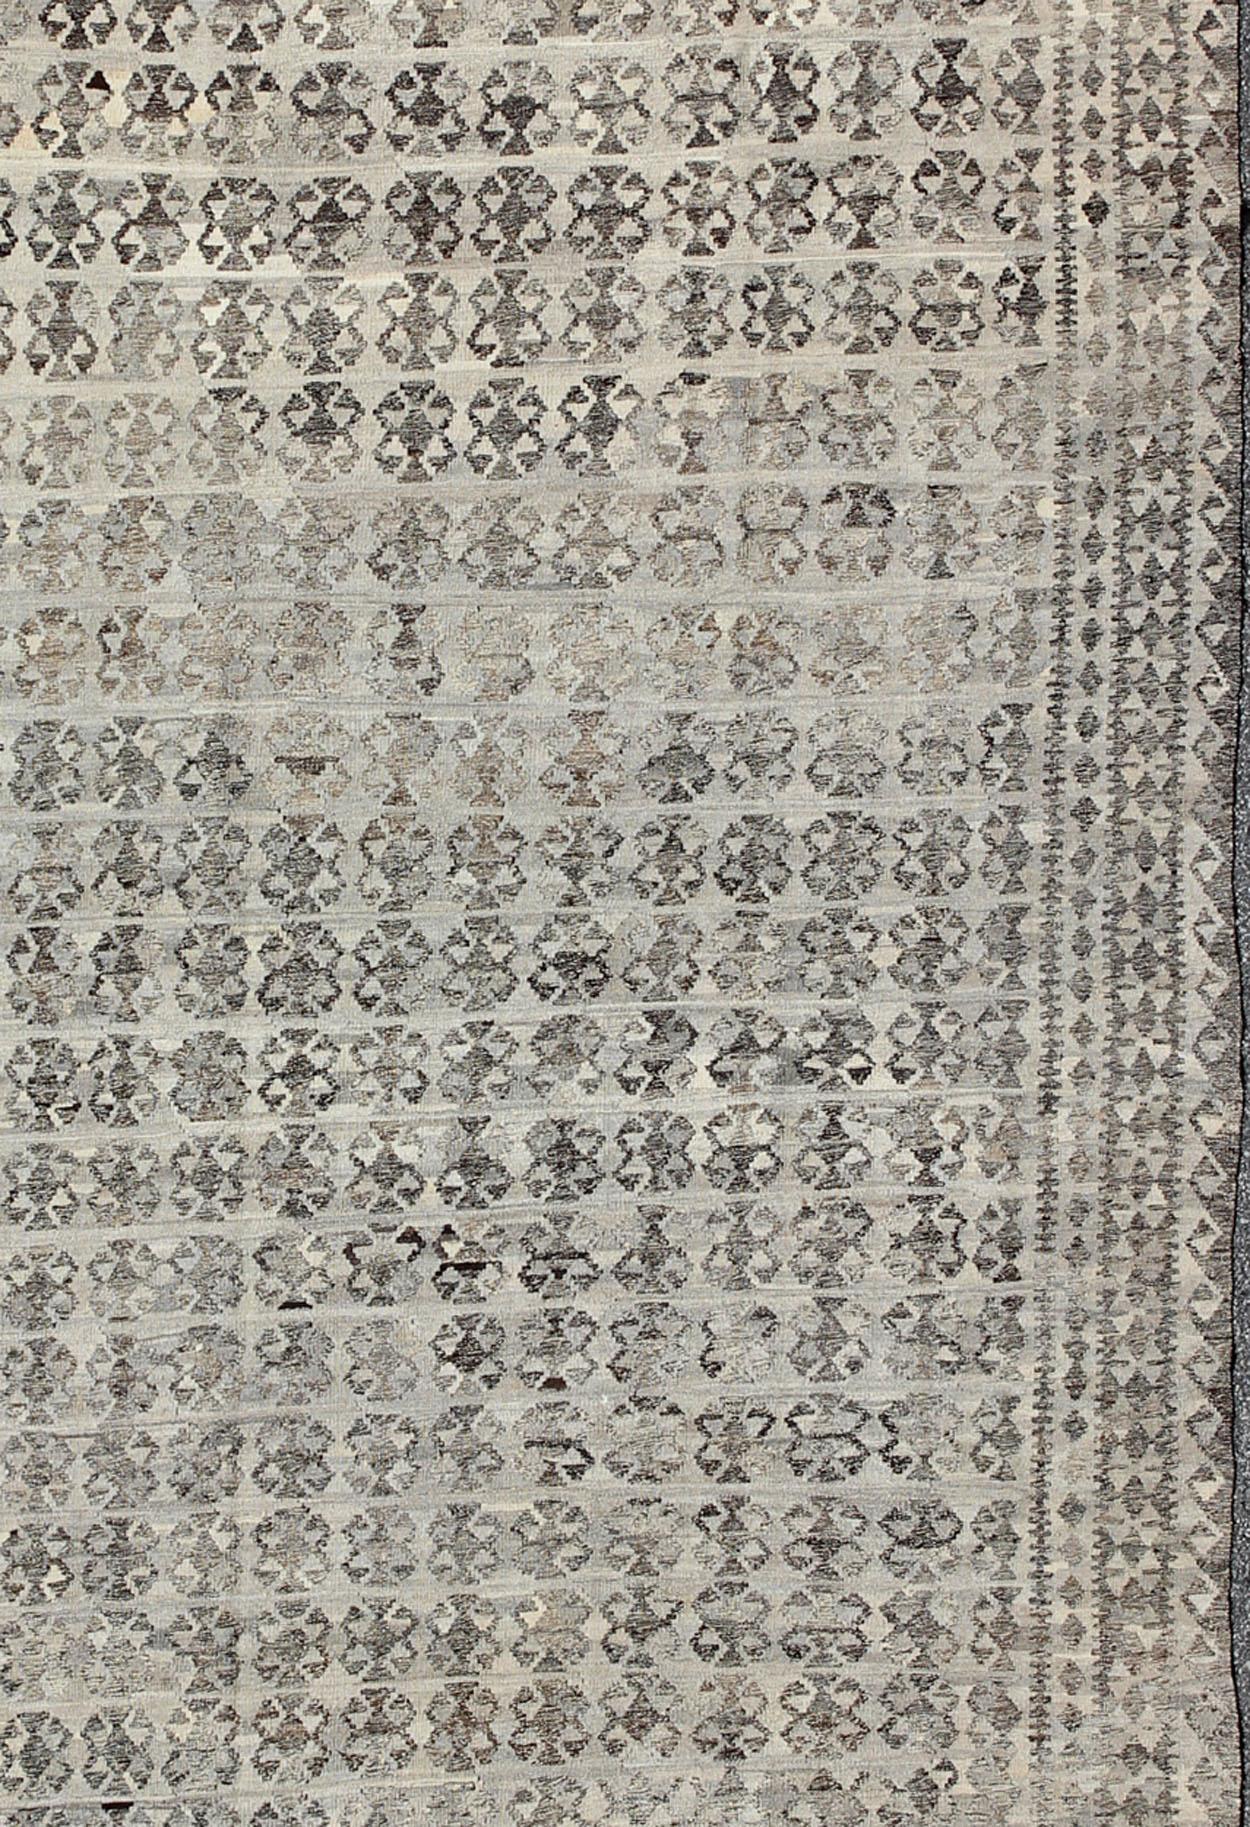 Modern Kilim for modern and casual interiors. Keivan Woven Arts, Rug/ABT-8122742, Afghan Kilim Rug in dark gray, silver and gray, origin/ Afghanistan Circa / 2010

Measures:10' x 16'3 

This hand-woven Afghan kilim rug features a beautiful all